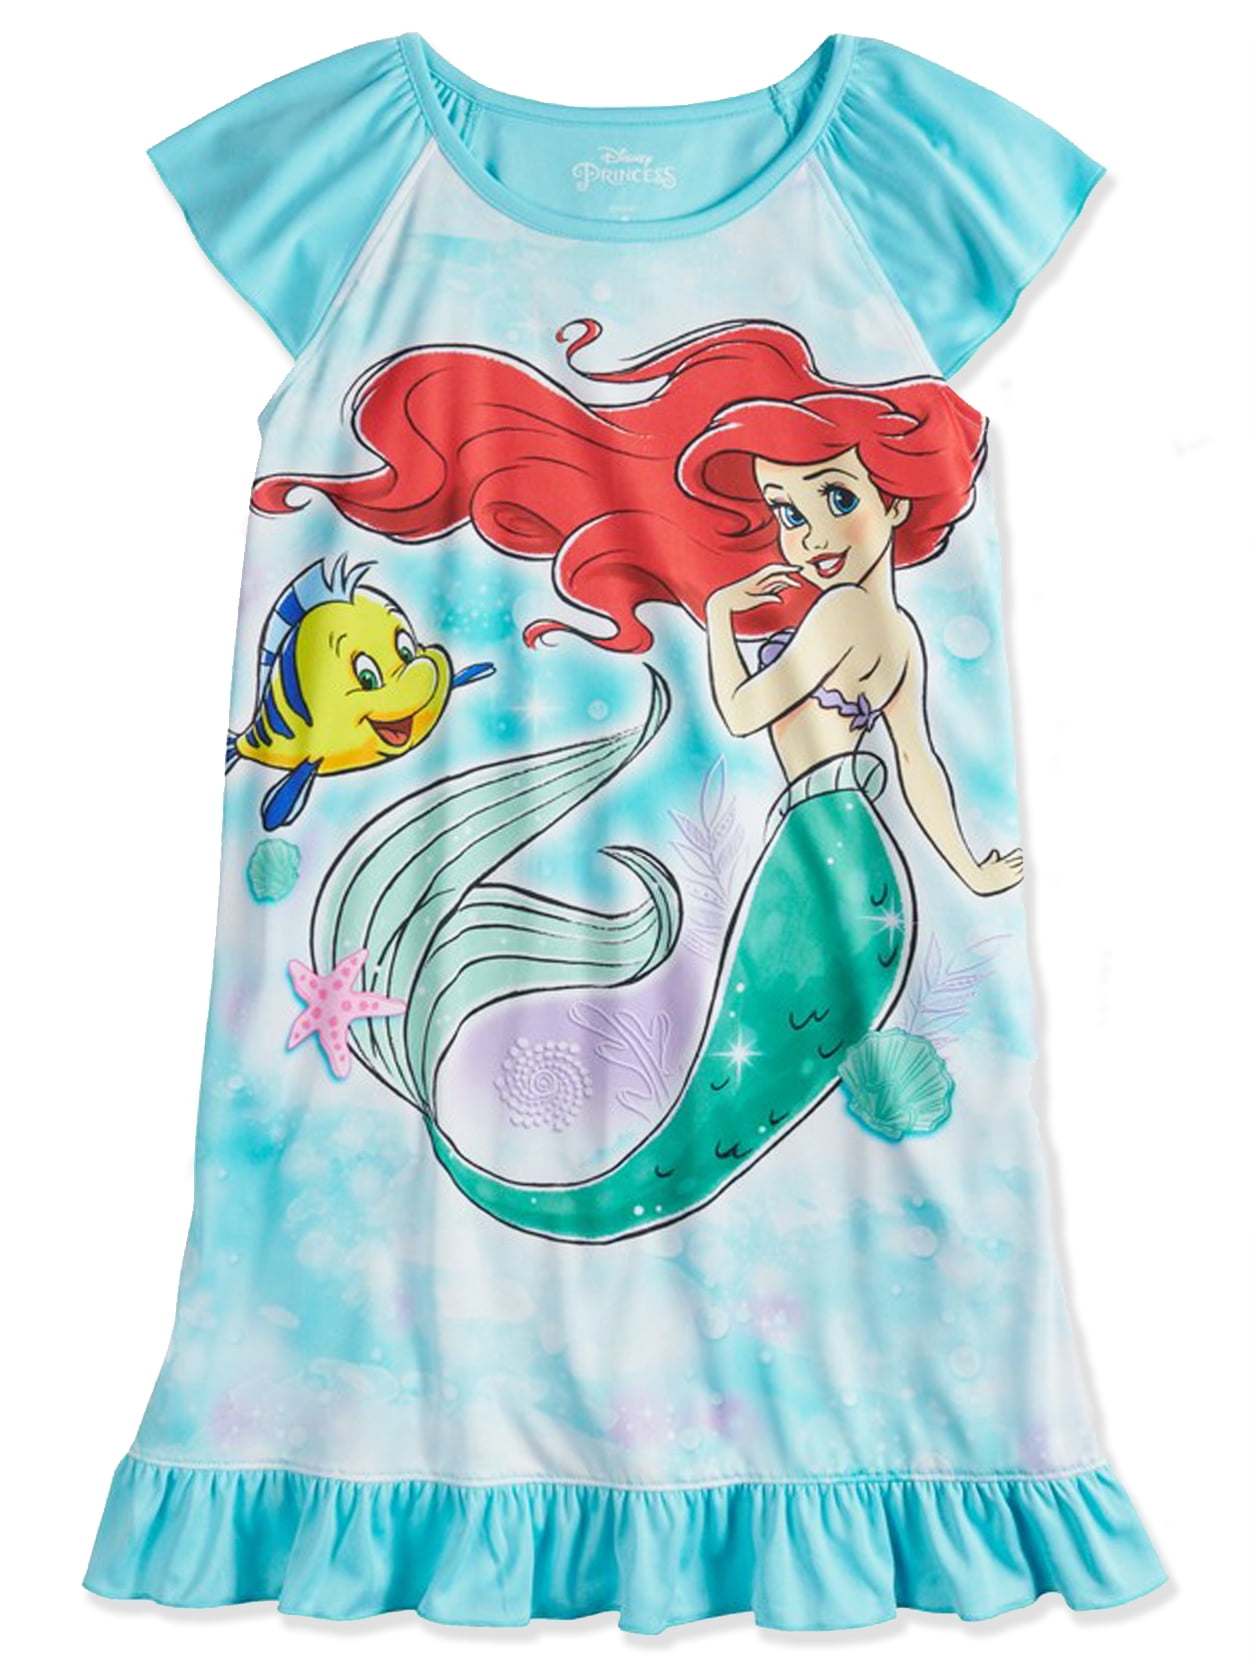 Disney Princess Ariel The Little Mermaid Girl's Nightgown Pajamas 